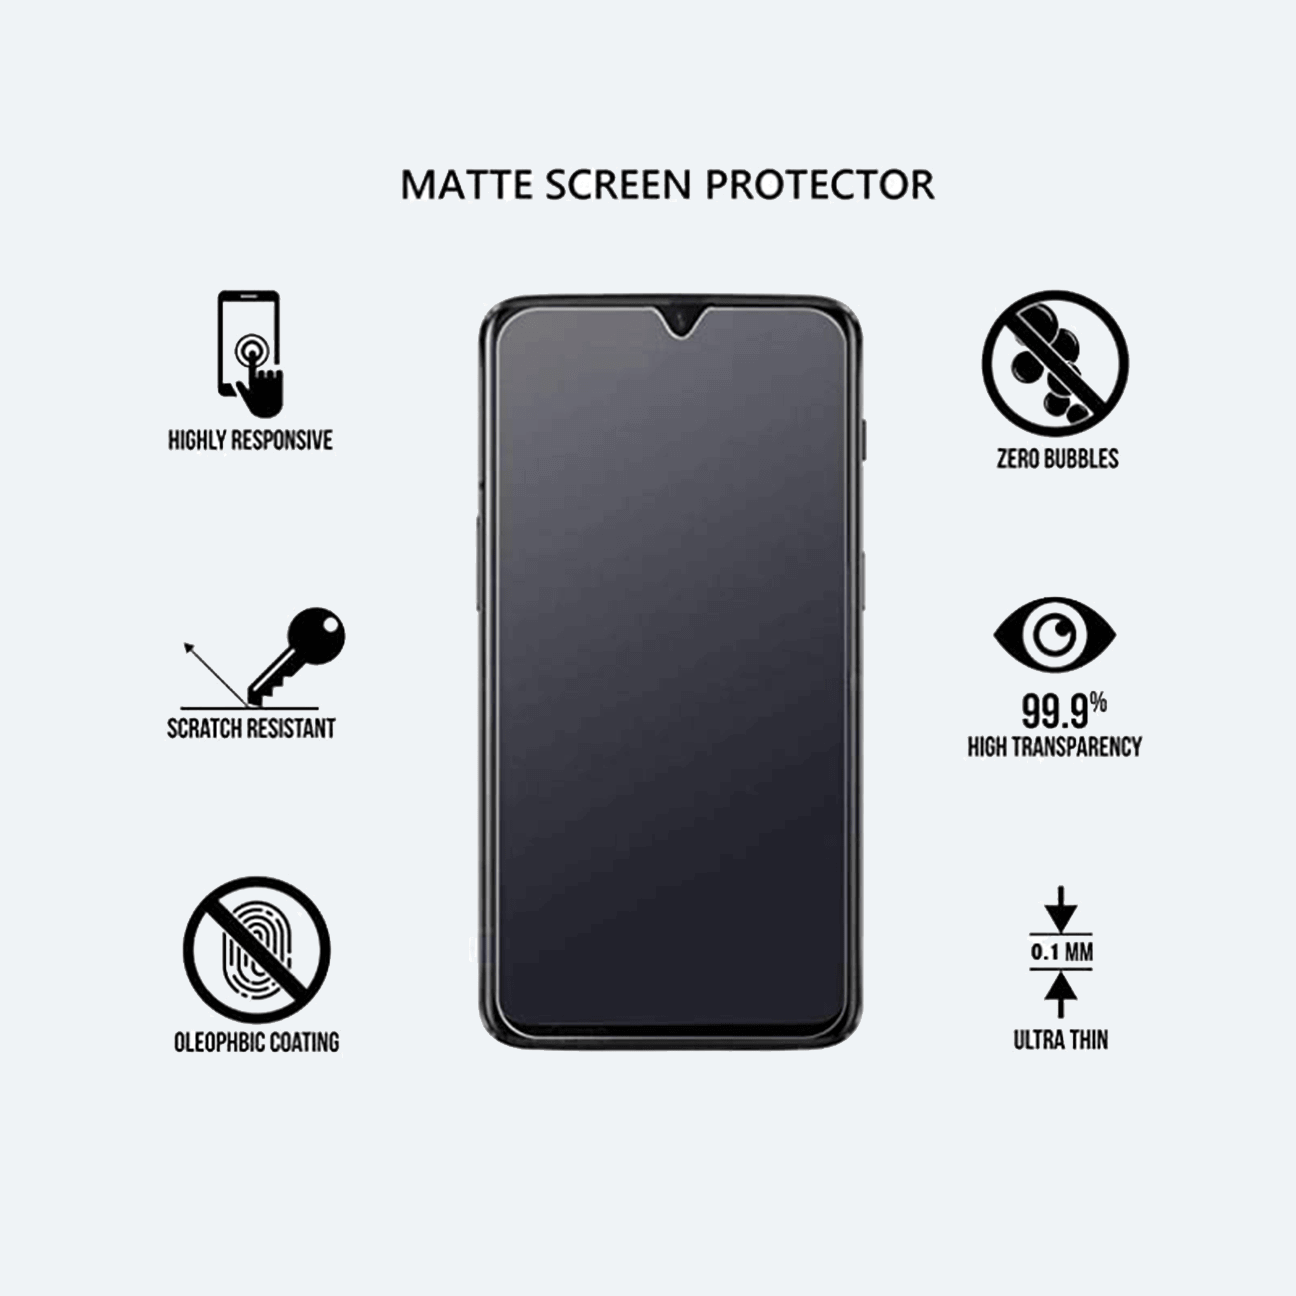 Oppo A7 Matte Unbreakable Glass